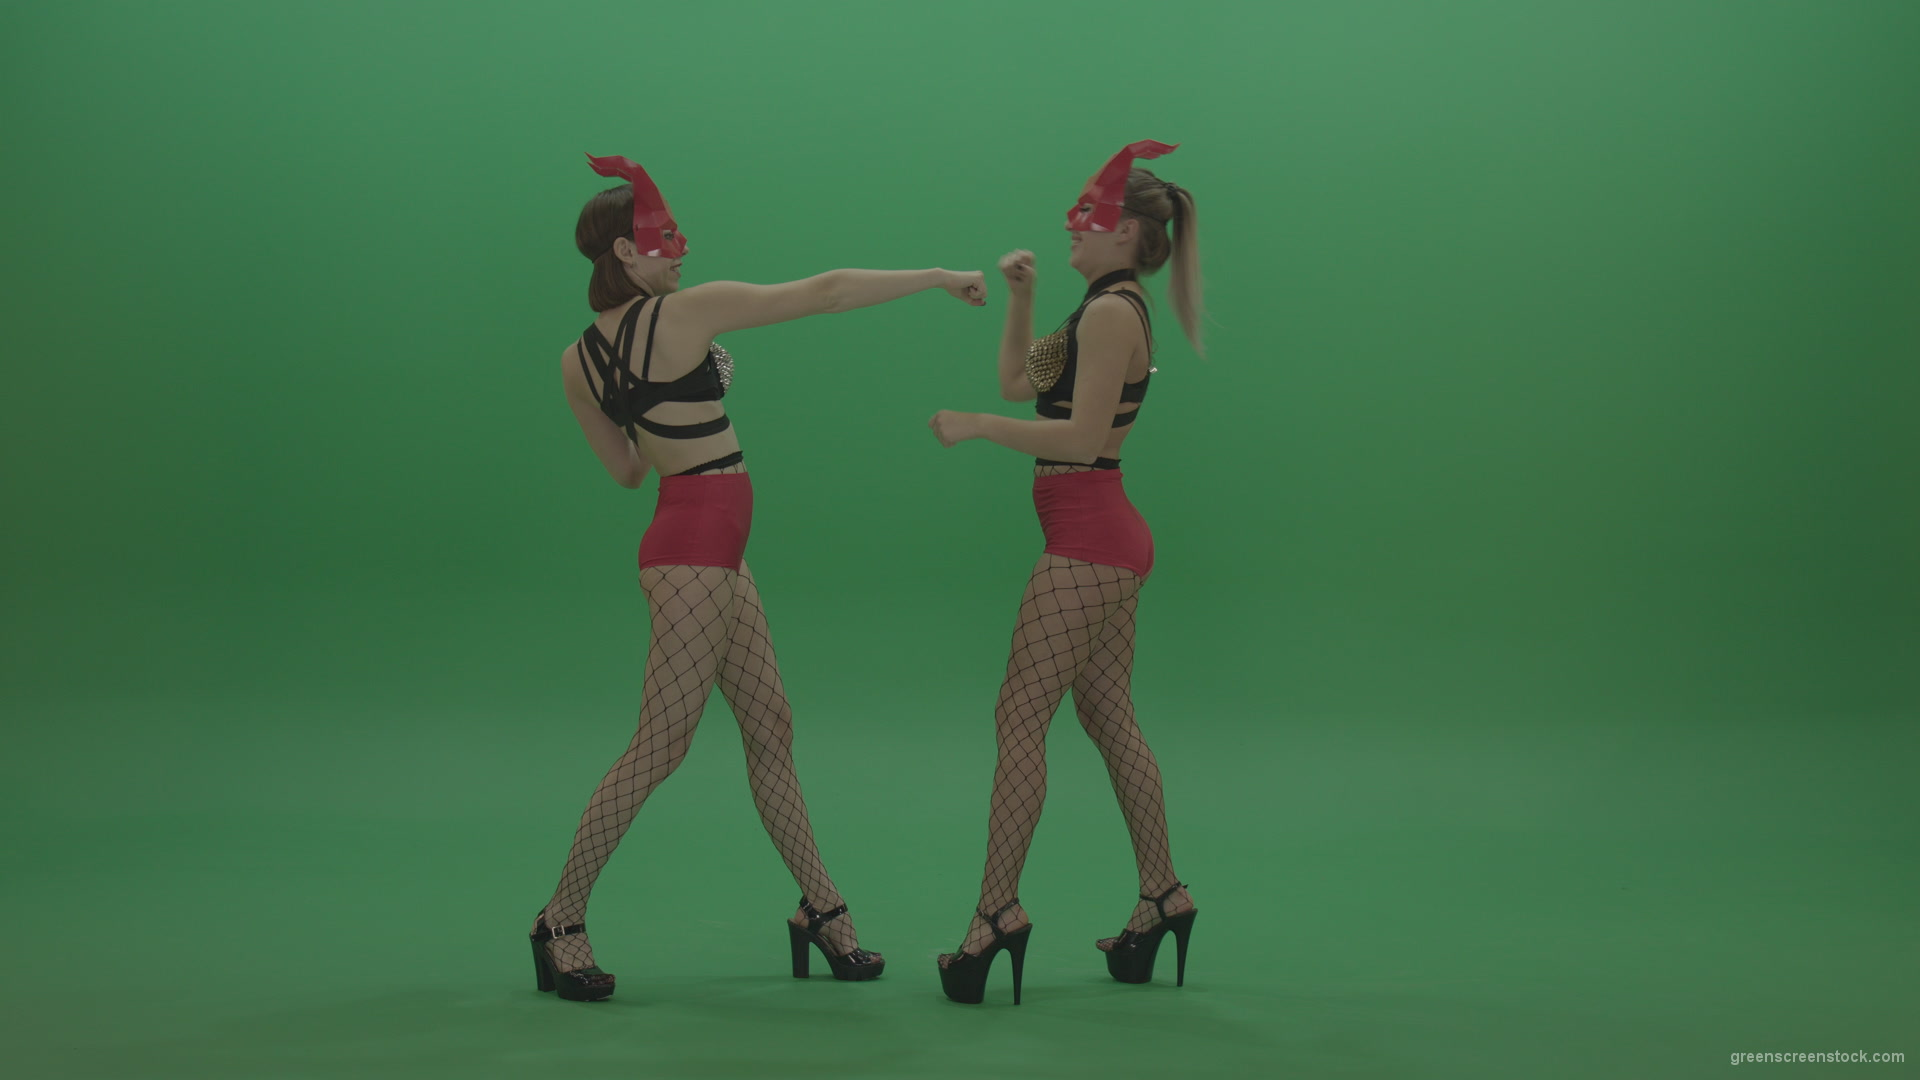 PJ-Demons-Go-Go-Dance-Woman-Red-Mask-Dancers-Green-Screen-Stock-16_005 Green Screen Stock